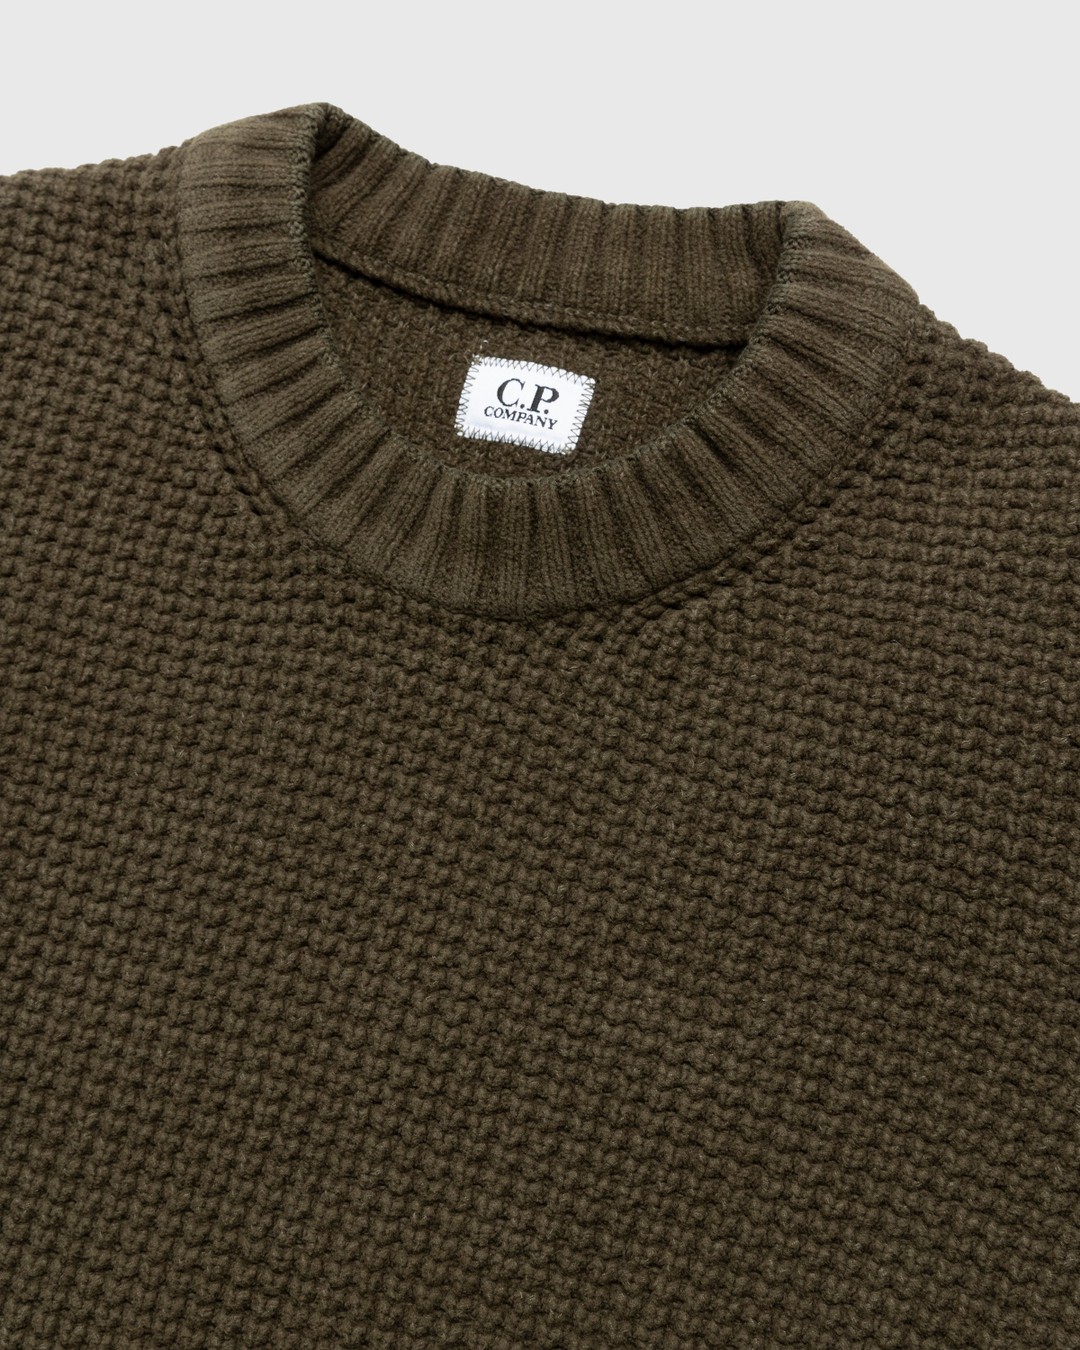 C.P. Company – Chenille Cotton Jumper Green - Knitwear - Green - Image 3